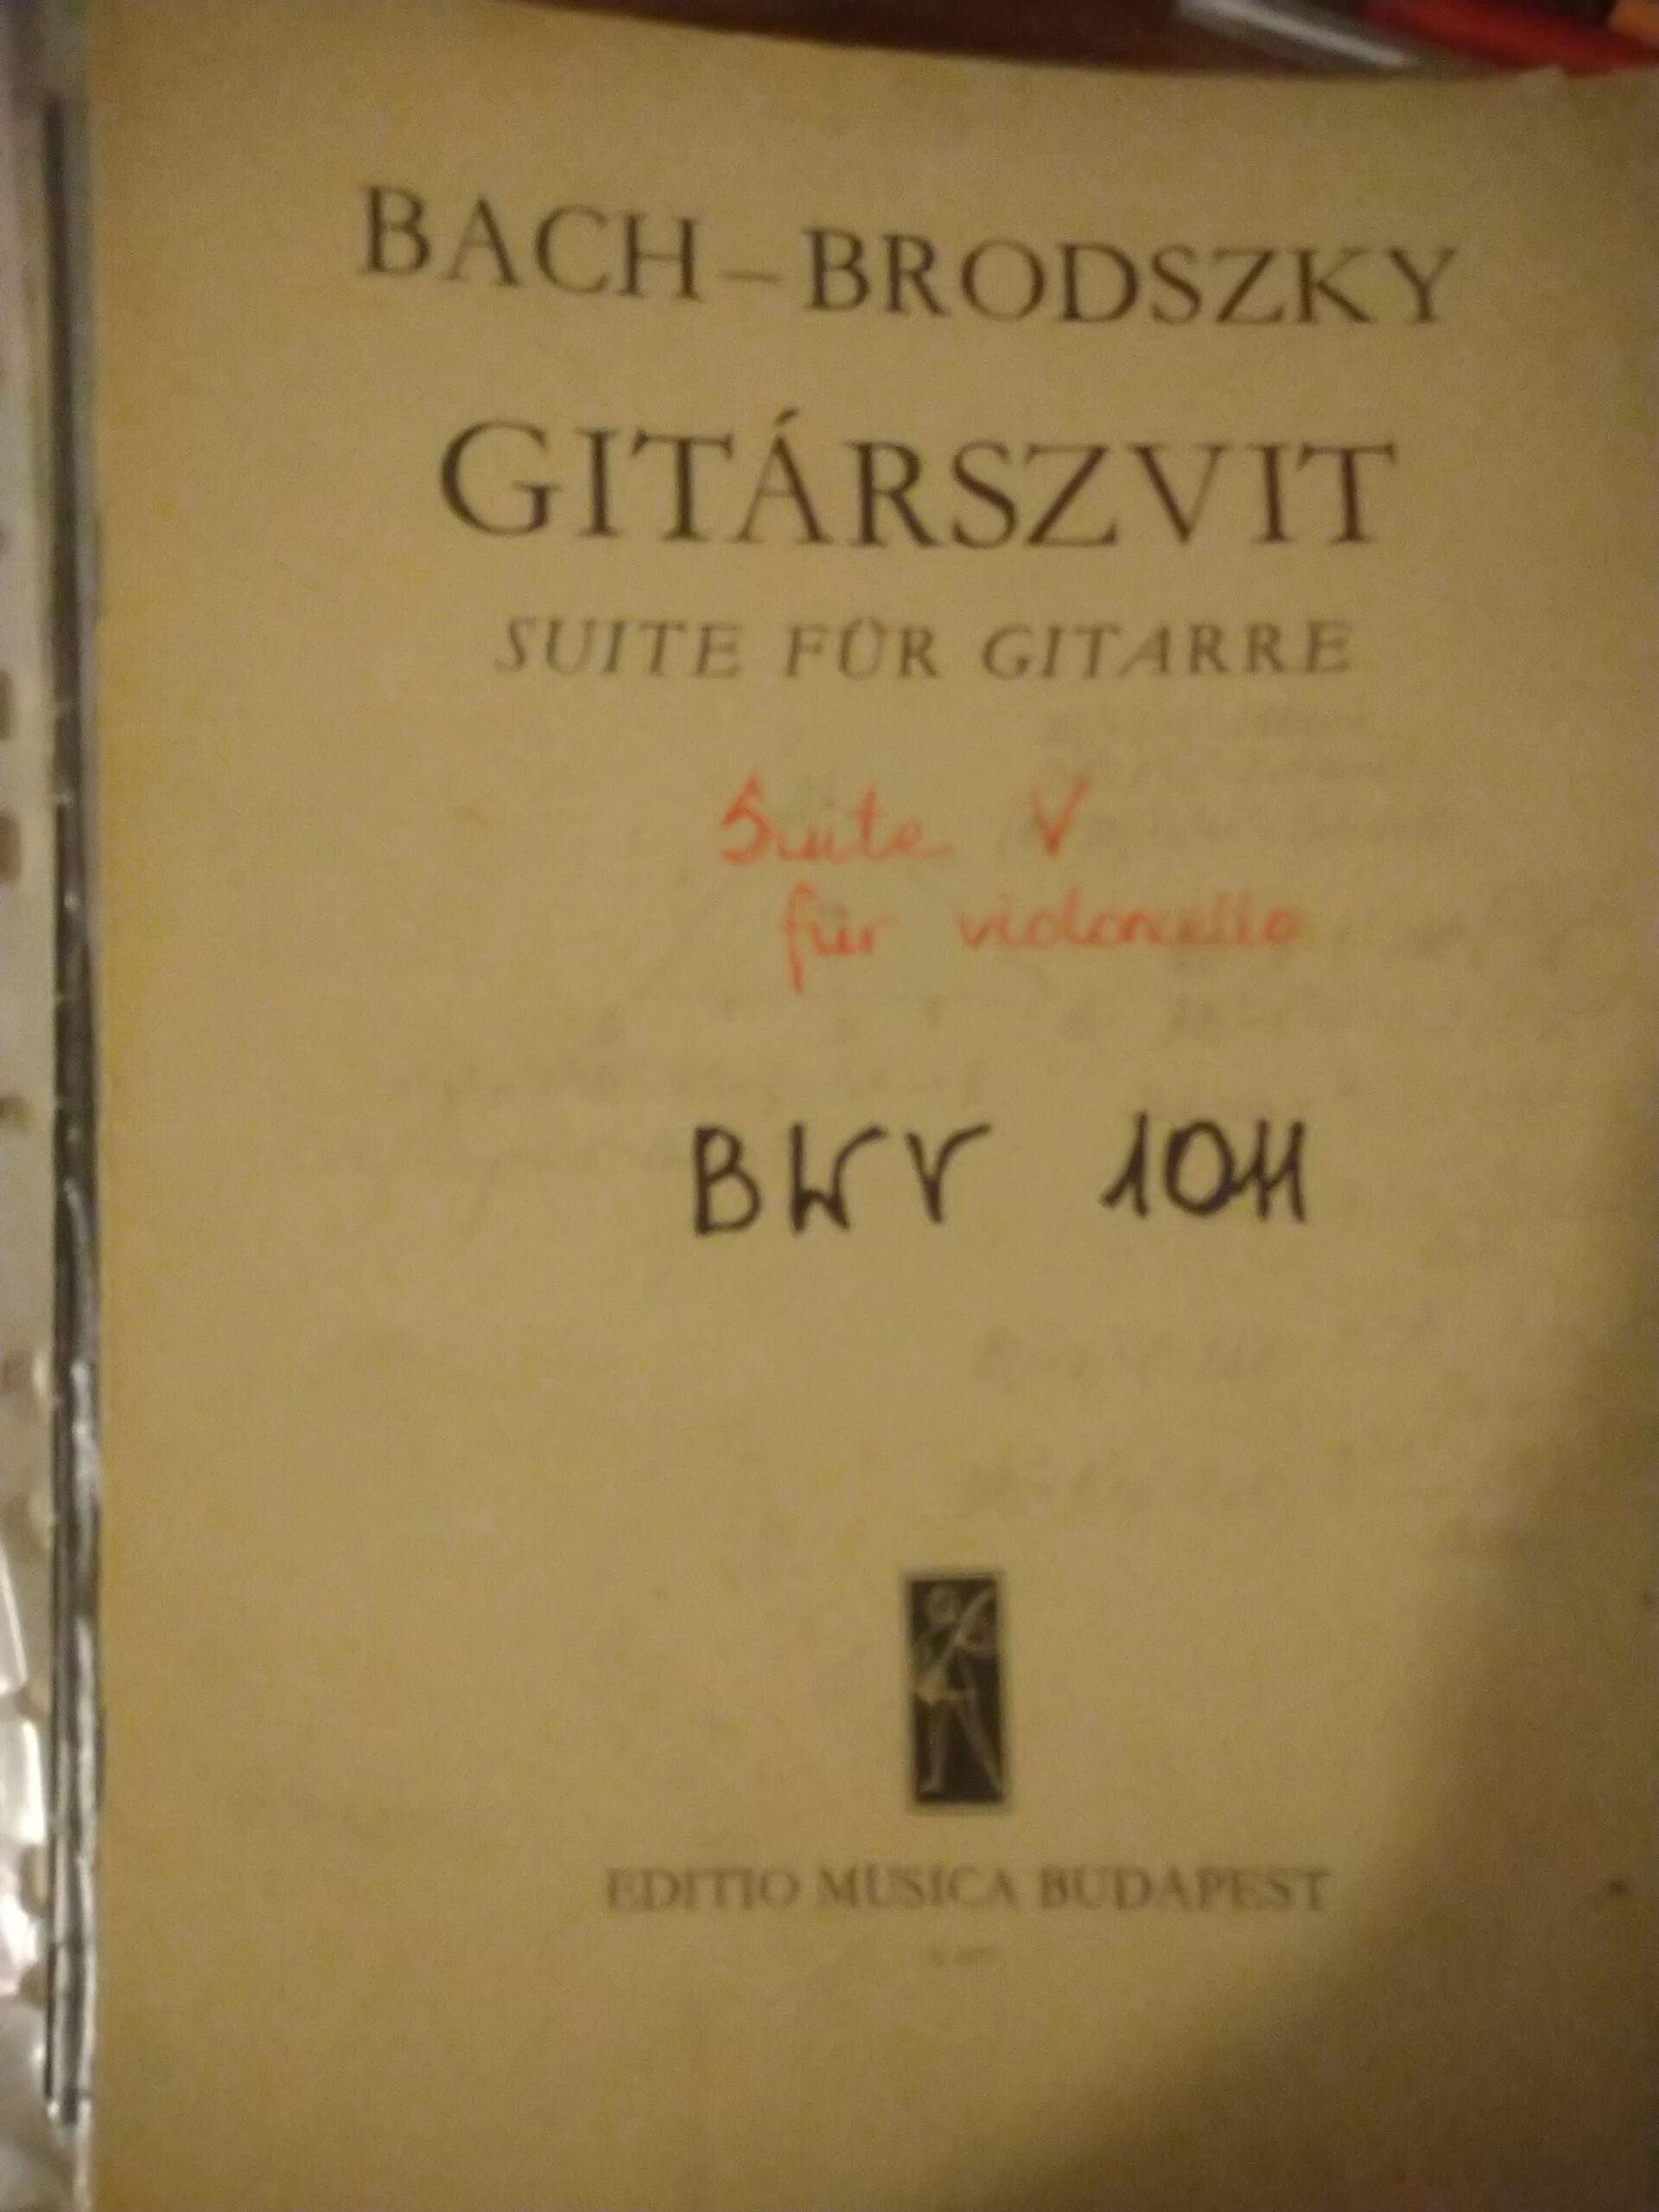 J.S.Bach V Suite violoncello - Edition Musica Budapest, transcr.Ferenc Brodszky